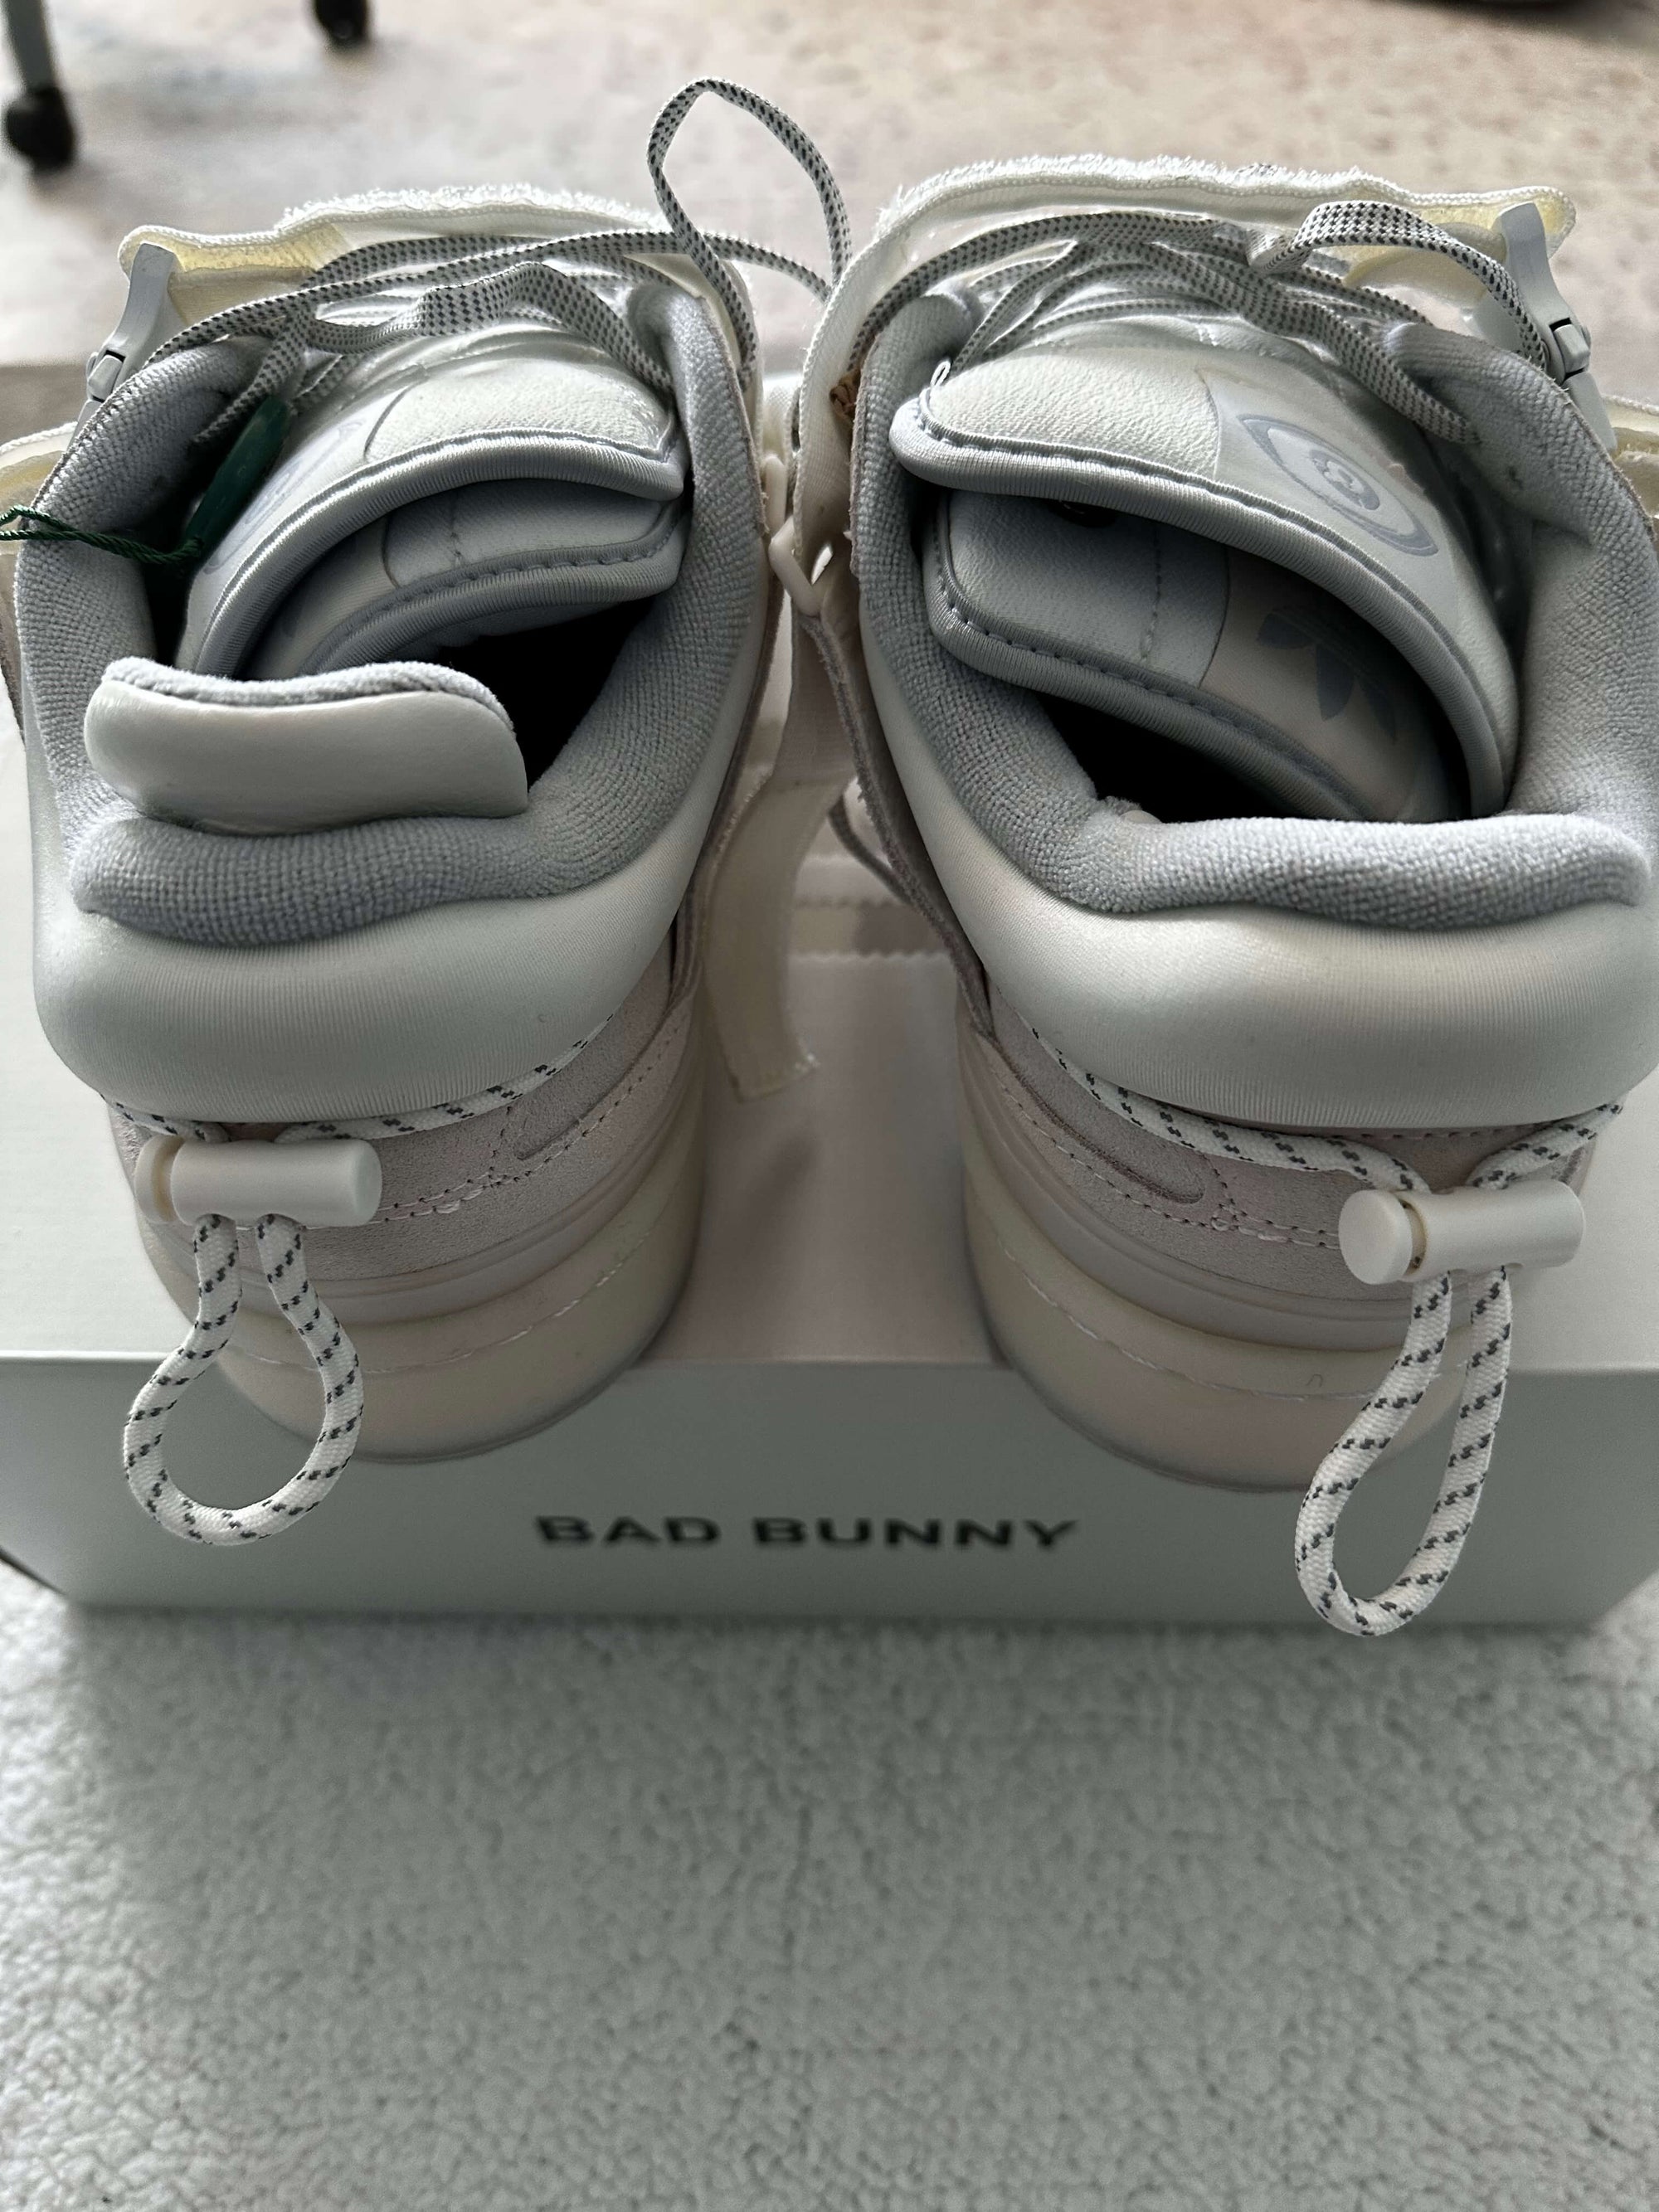 Sneakers Adidas Forum Bad Bunny Gris.